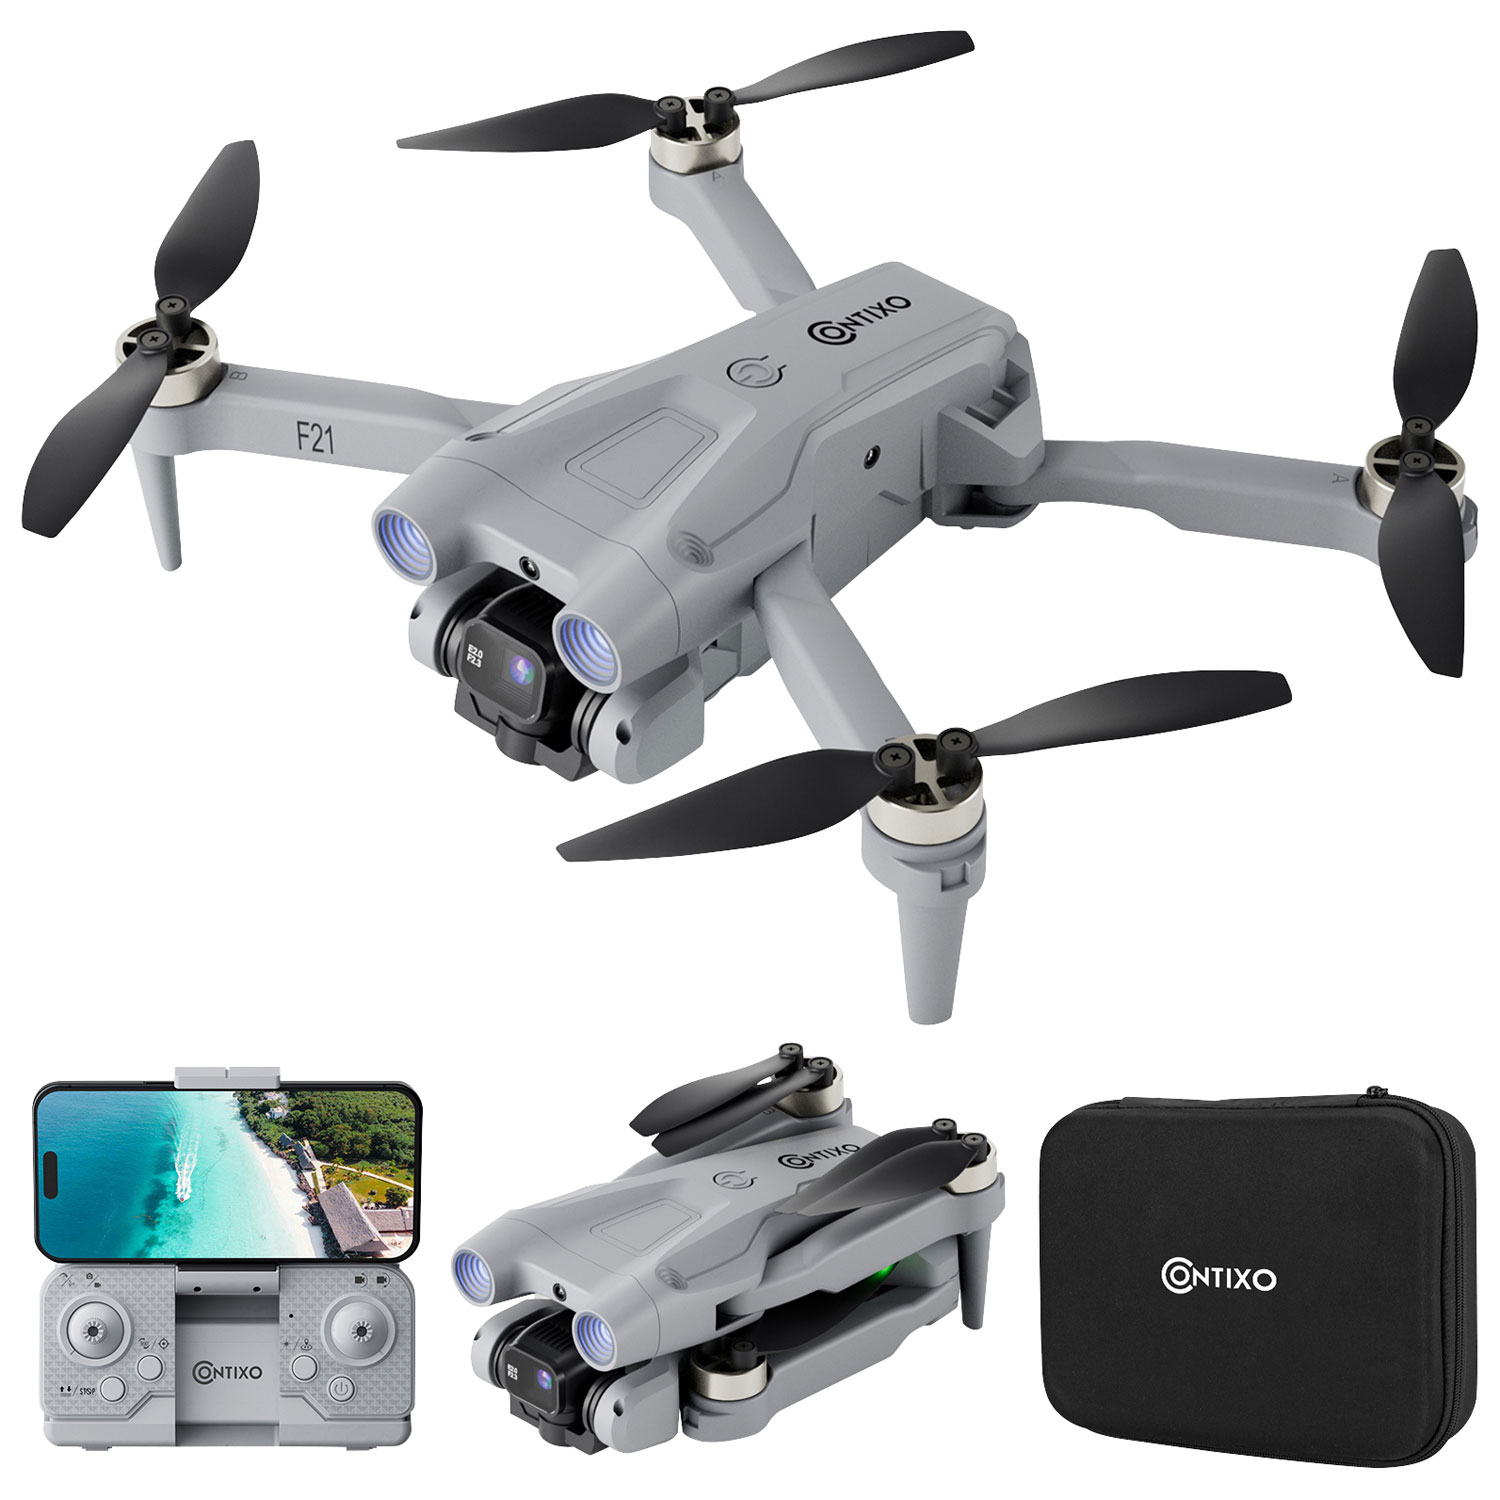 Contixo F21 Quadcopter Drone with Camera & Controller - Grey